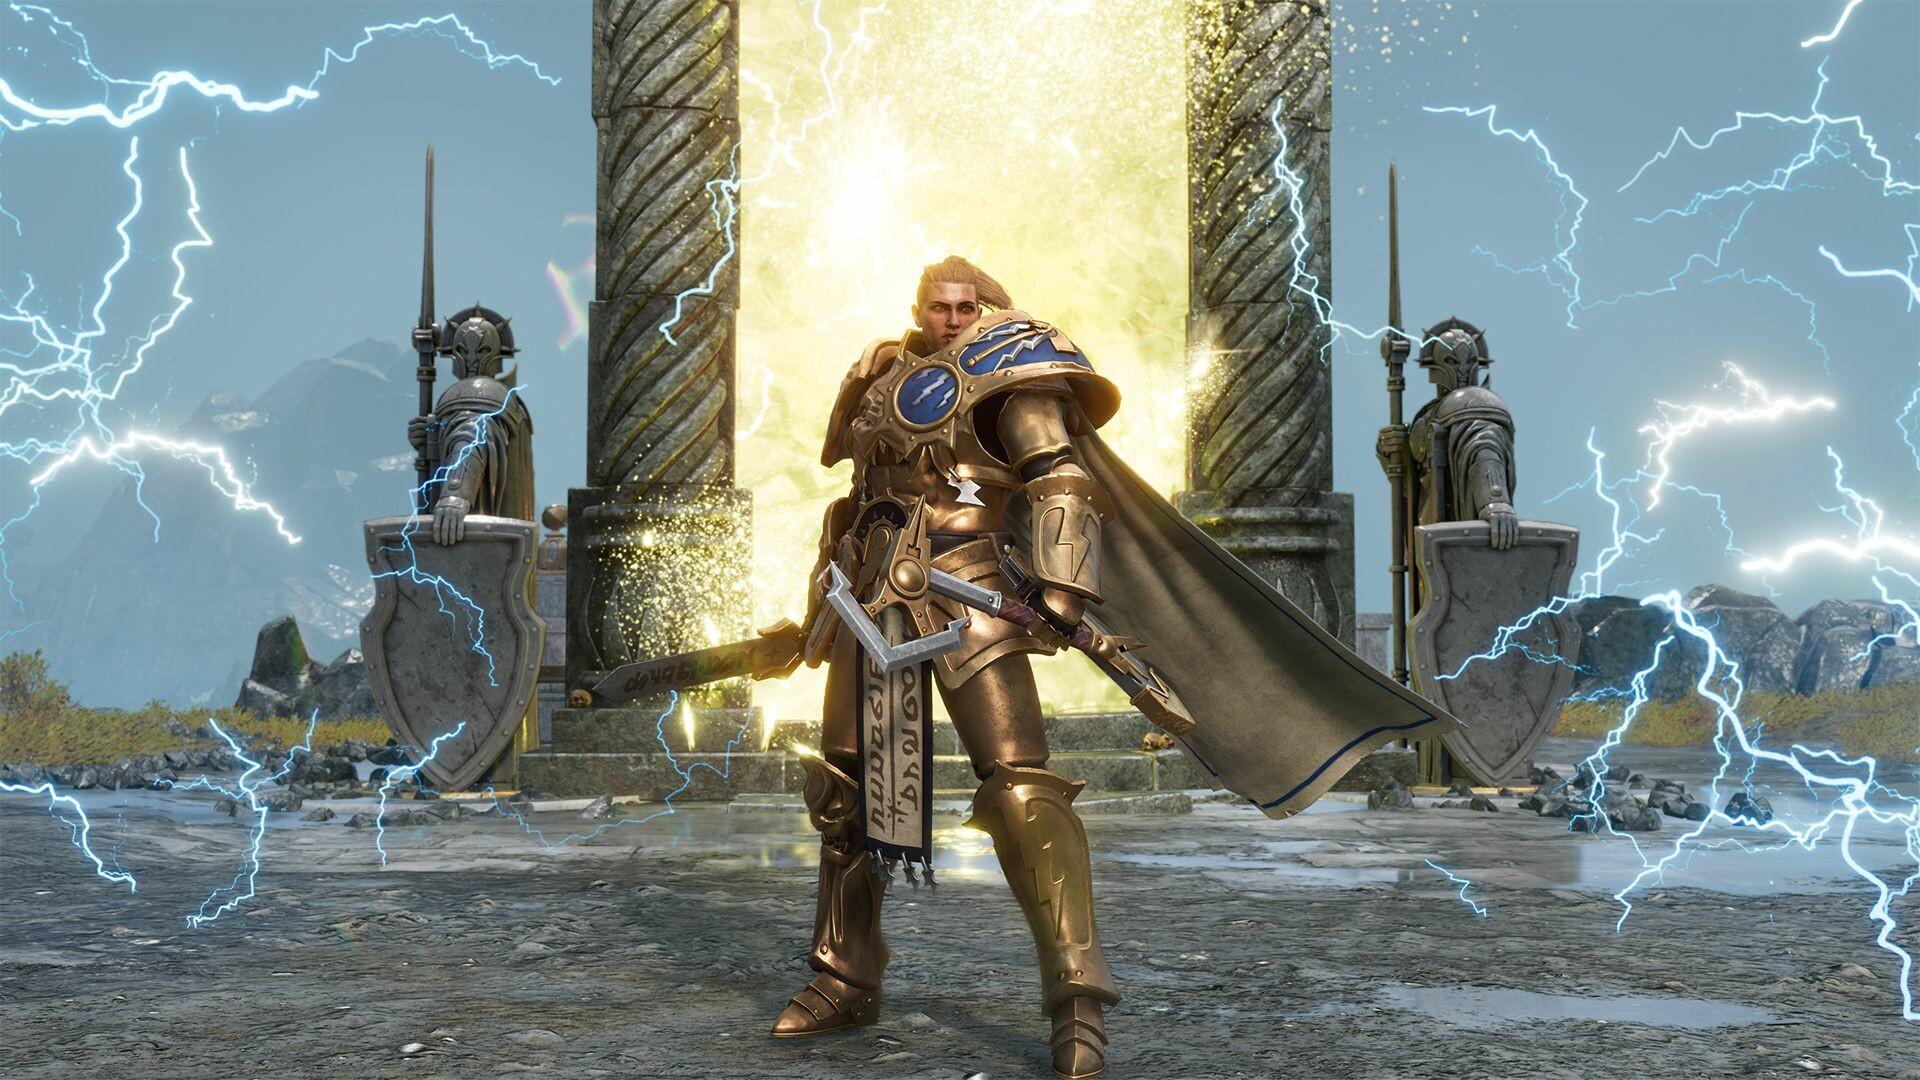 Screenshot 1 of Warhammer Age of Sigmar: อาณาจักรแห่งความพินาศ 